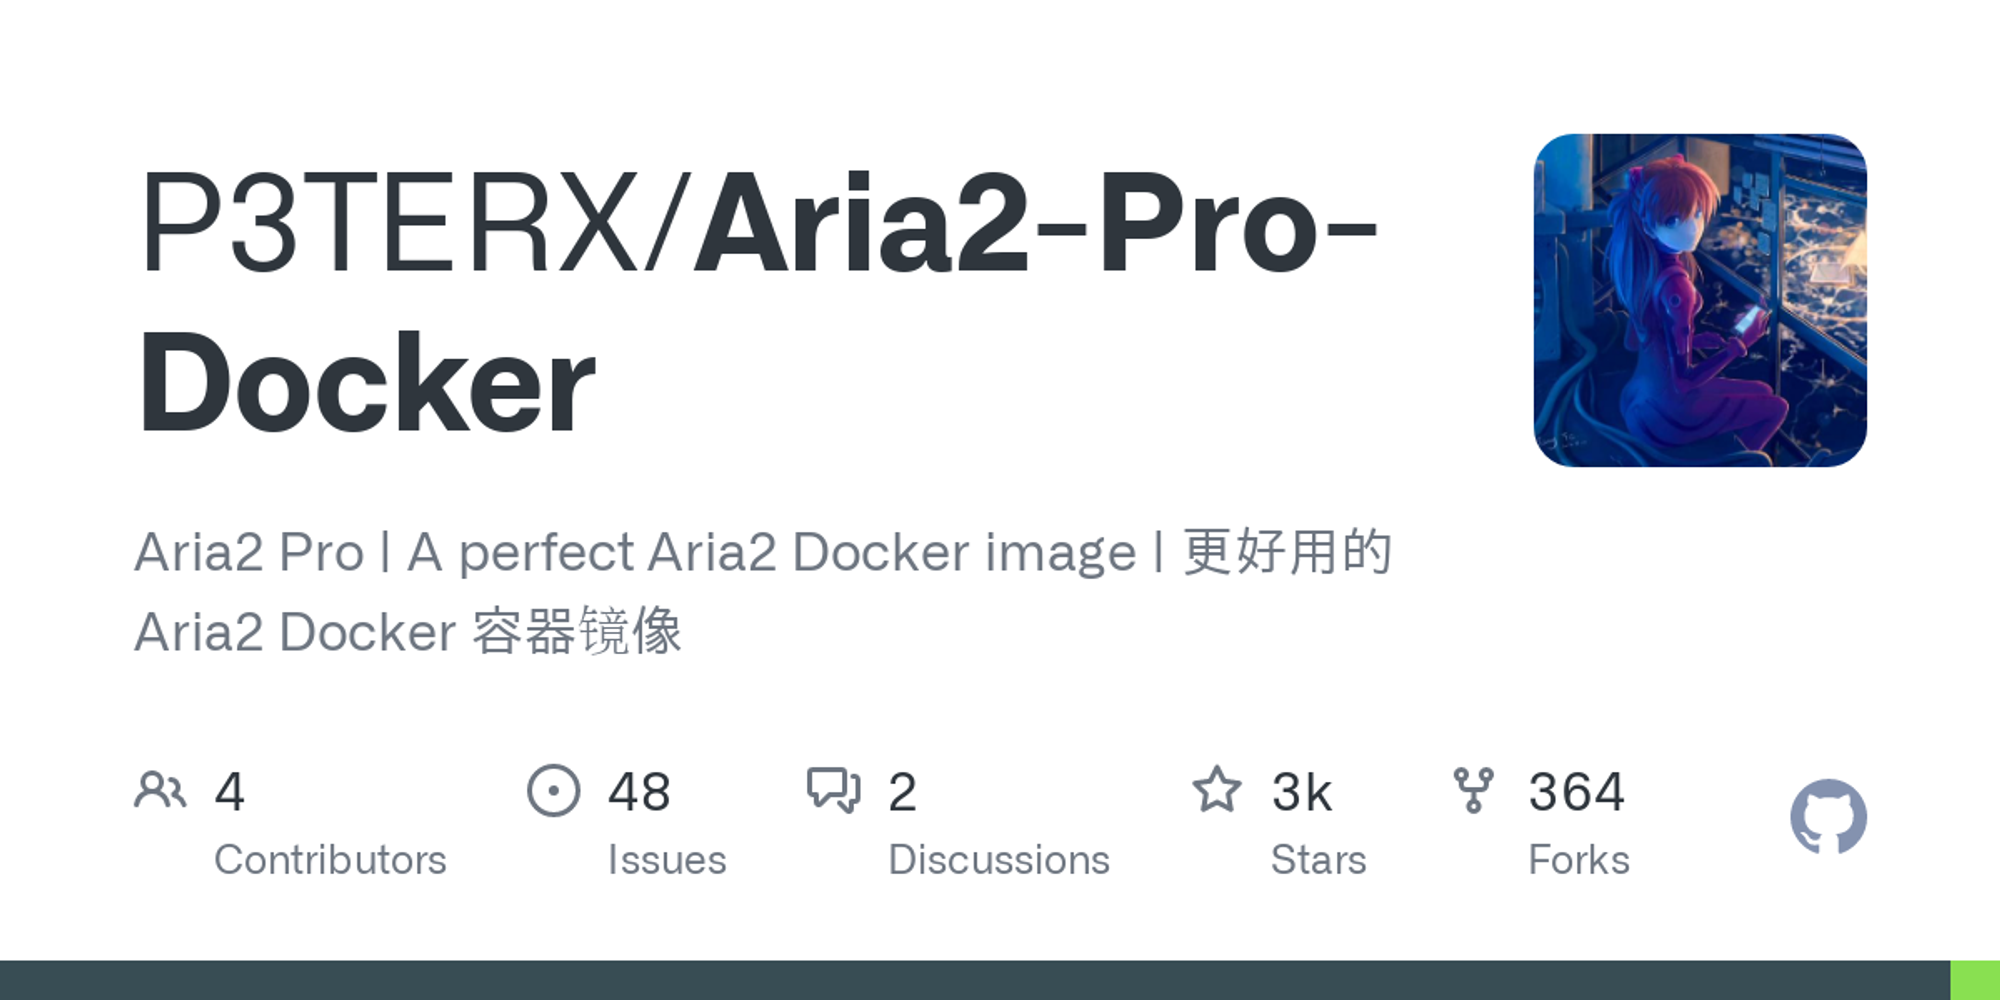 GitHub - P3TERX/Aria2-Pro-Docker: Aria2 Pro | A perfect Aria2 Docker image | 更好用的 Aria2 Docker 容器镜像